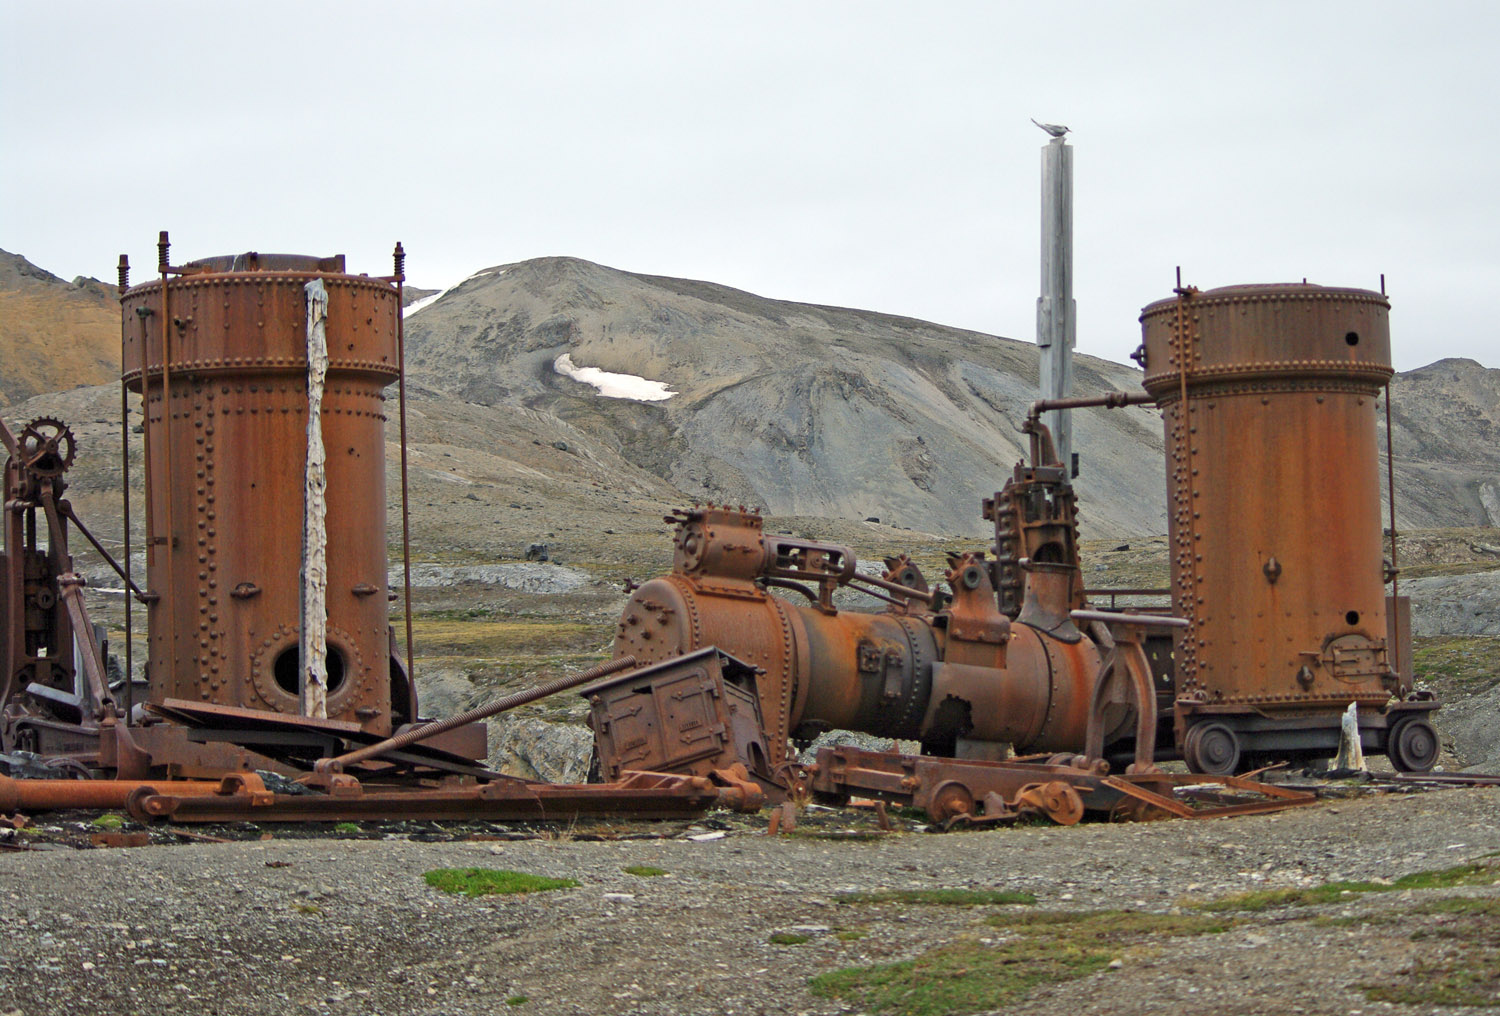 Mining Relics - Svalbard - 4 - Abandonded Machinery